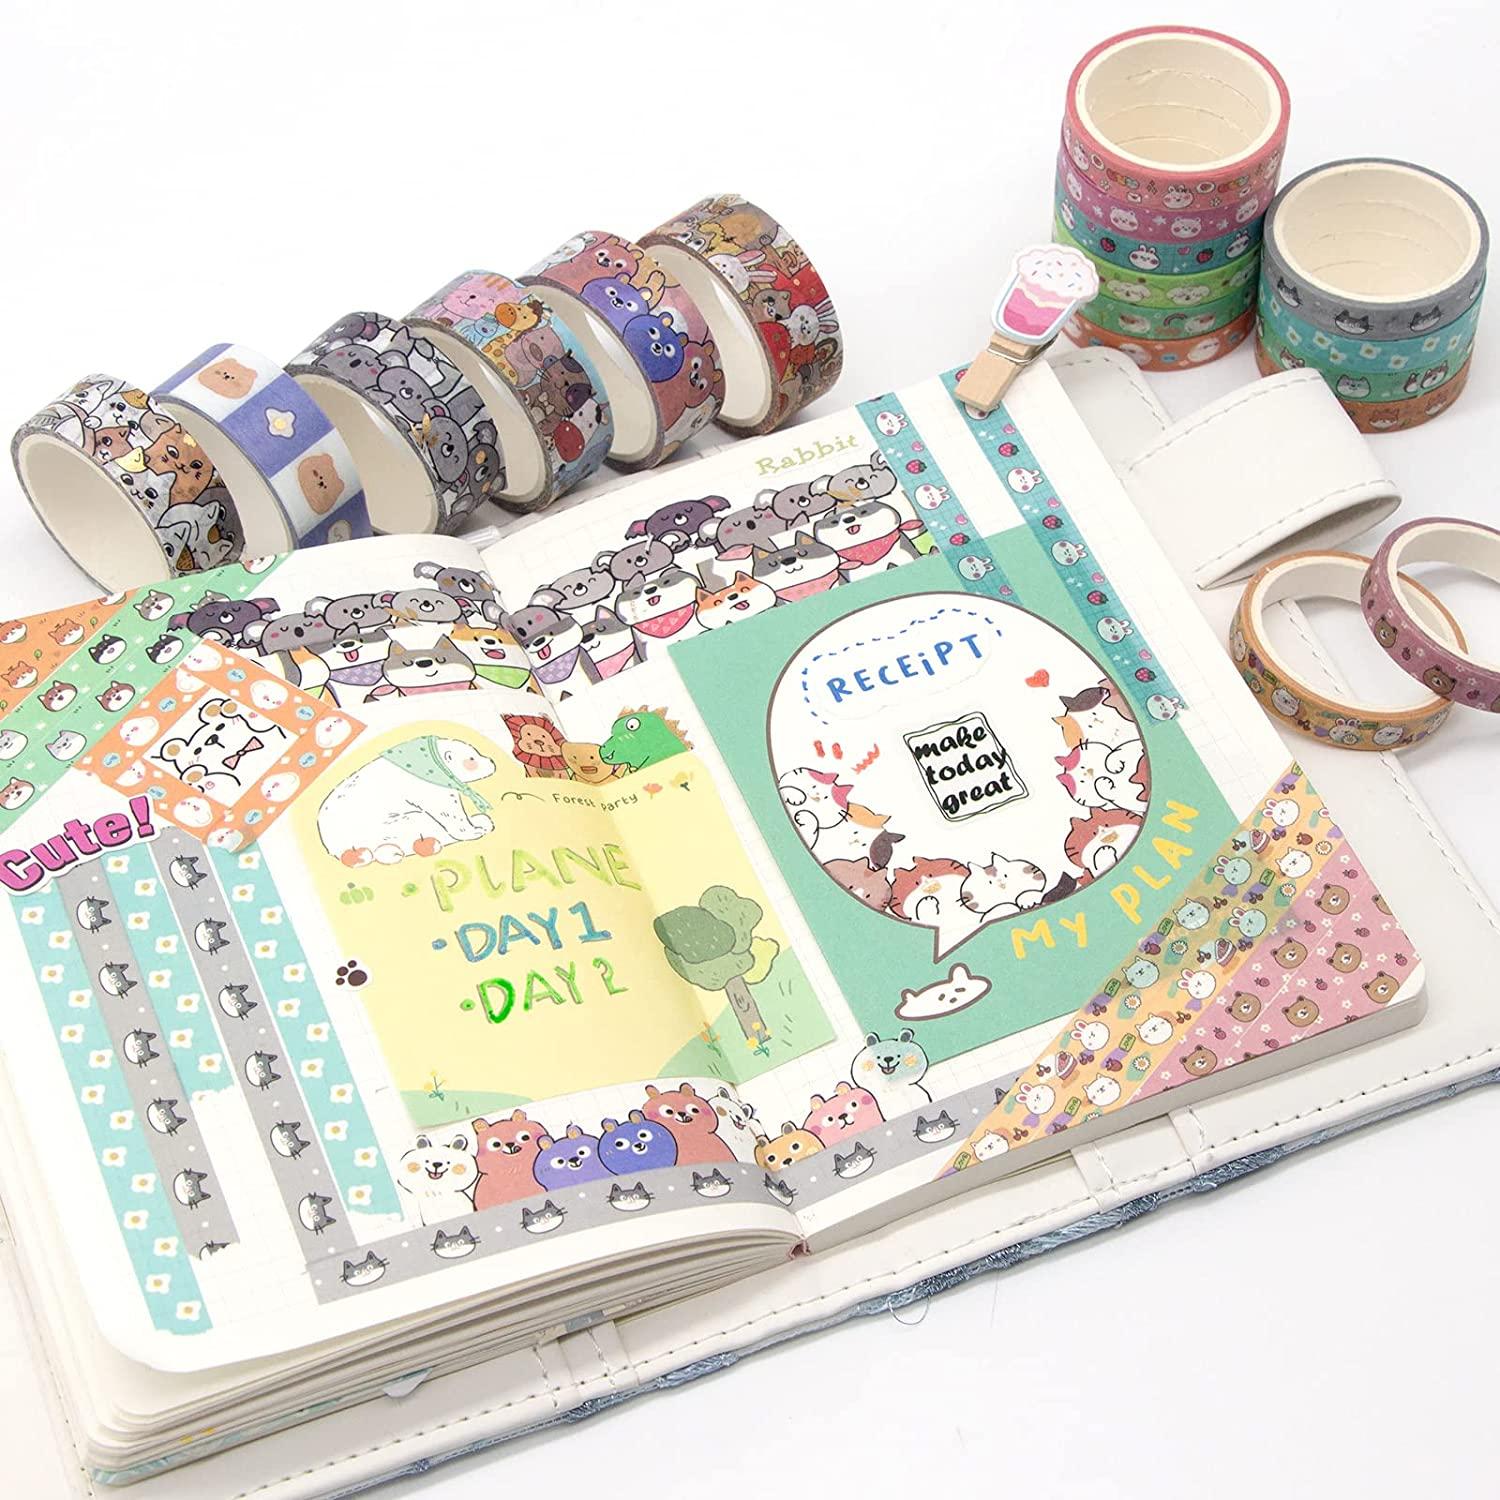 Washi Tape Teal & Gold Washi Tape Scrapbook Supplies Teal Craft Tape  Journal Supplies Aesthetic Decorative Tape Bujo Supplies -  Australia